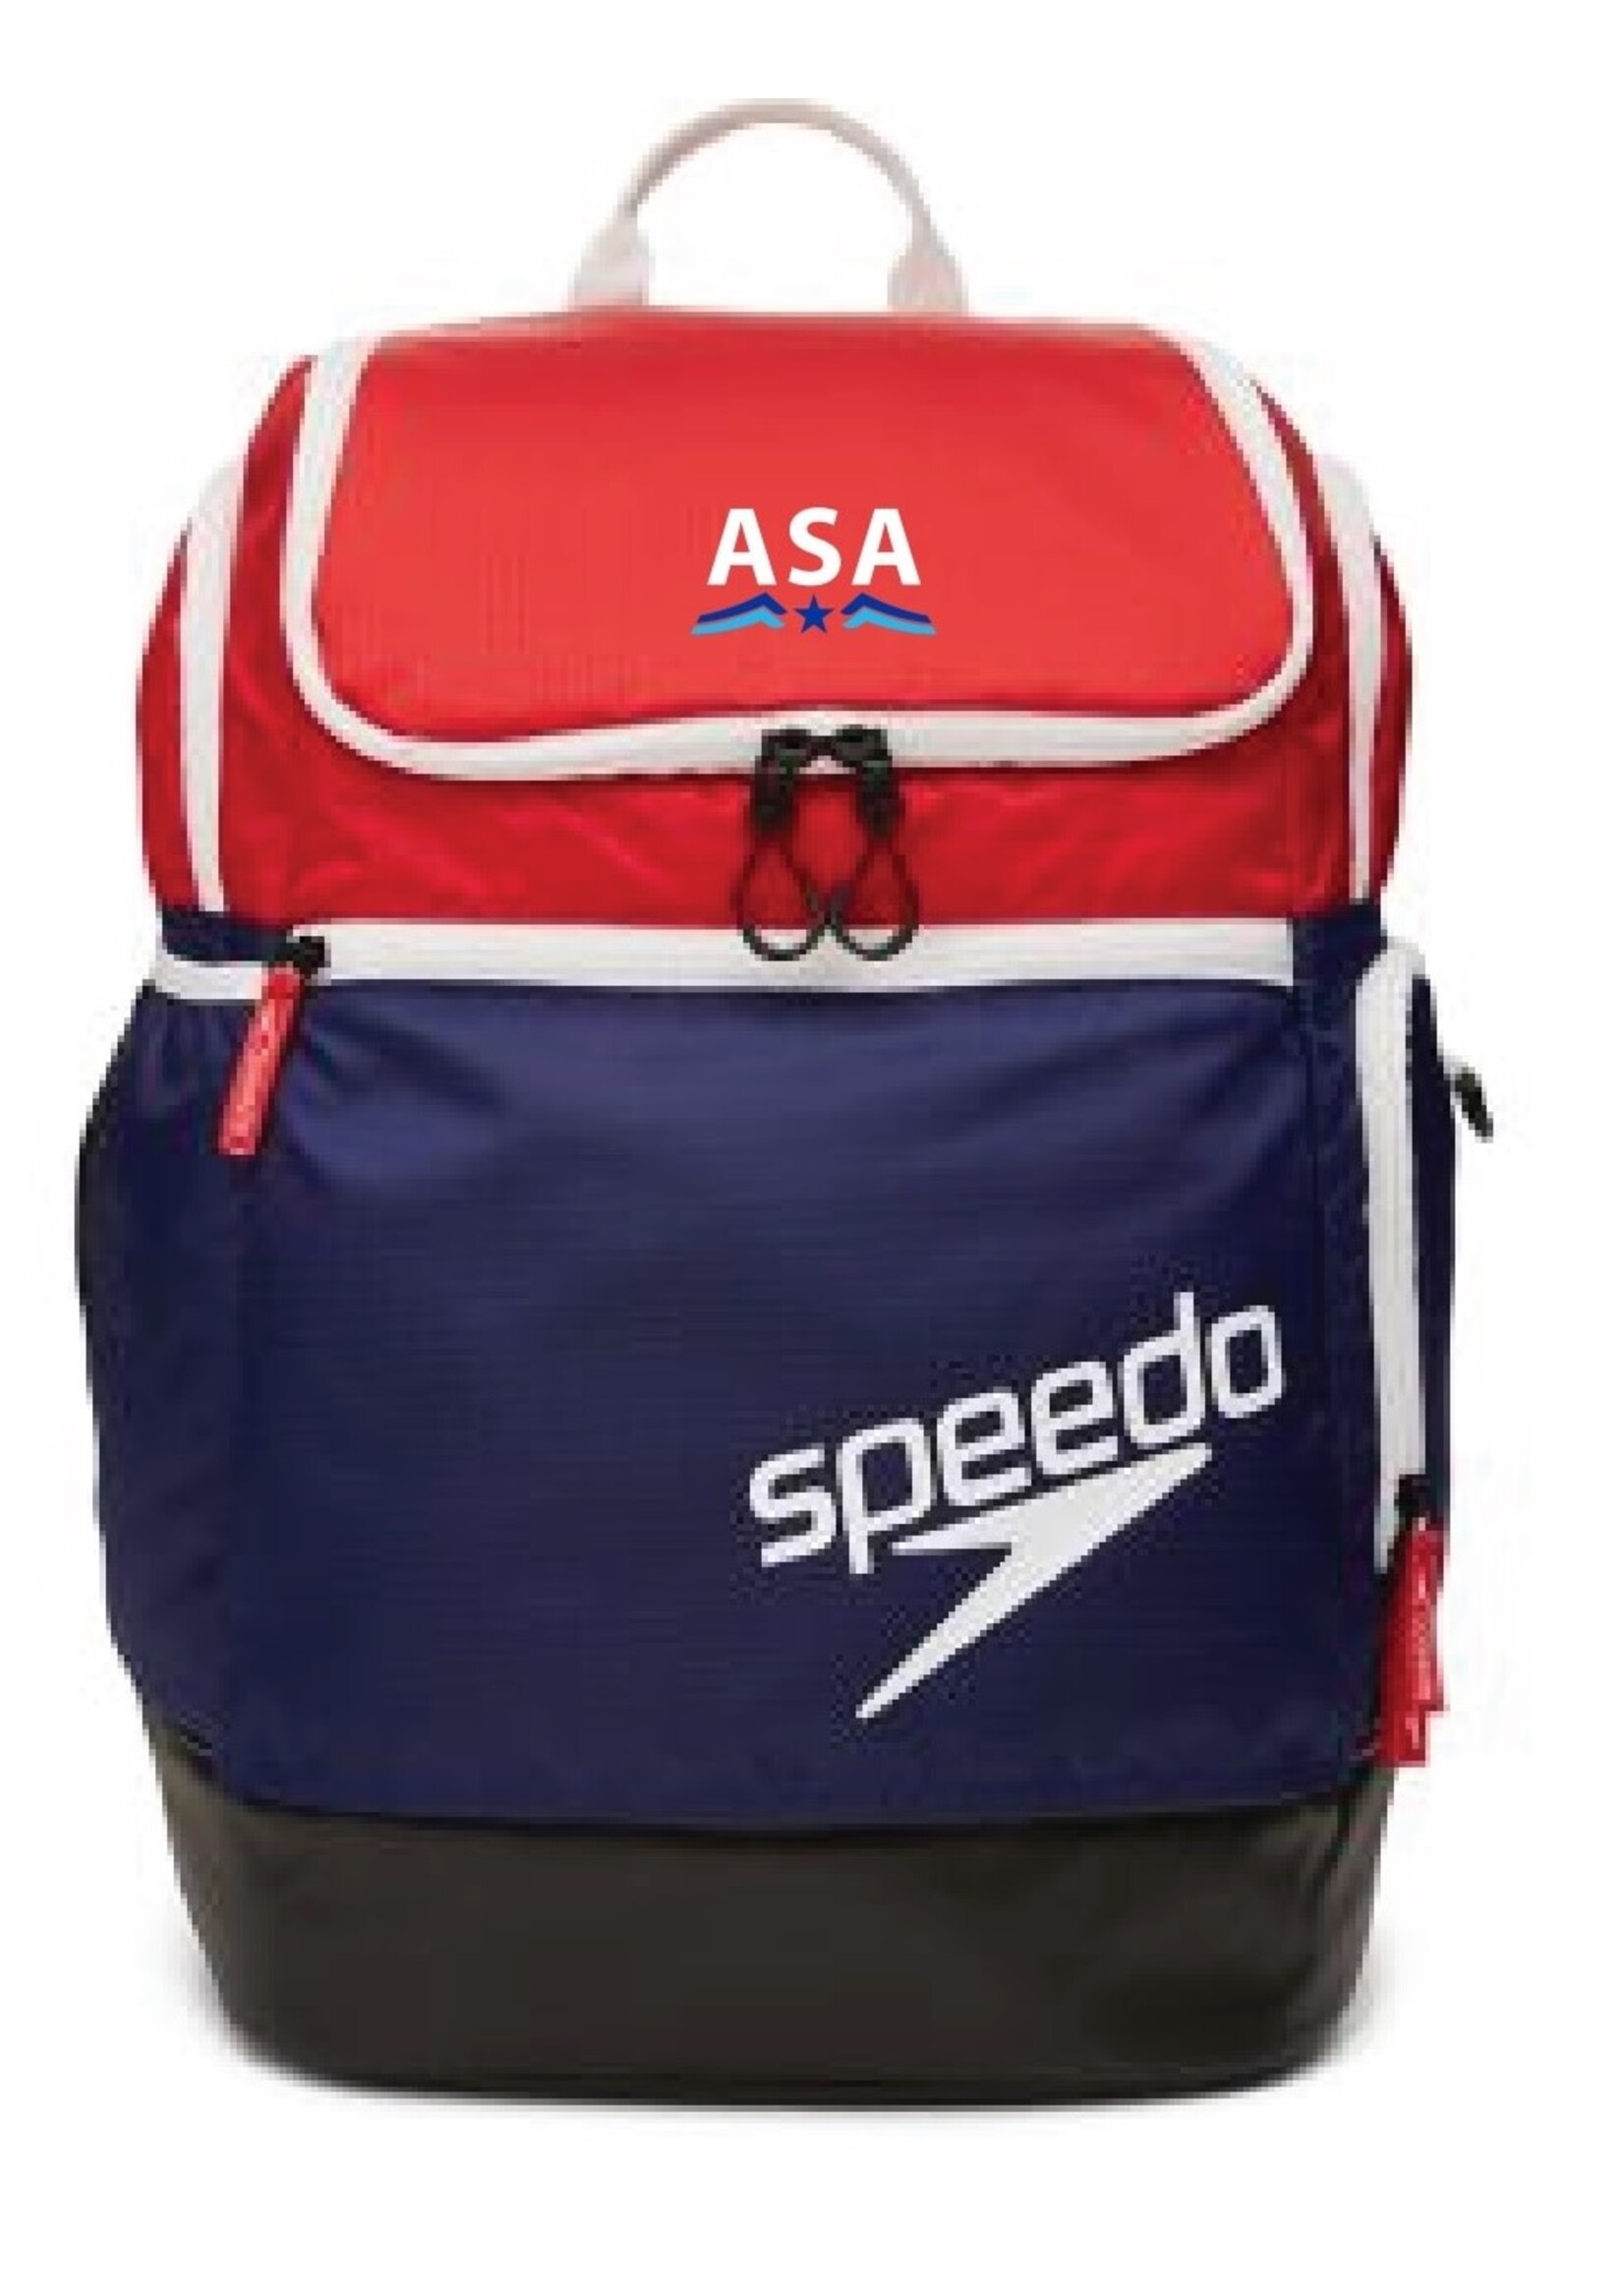 ASA ASA Teamster 2.0 Backpack Red/White/Blue